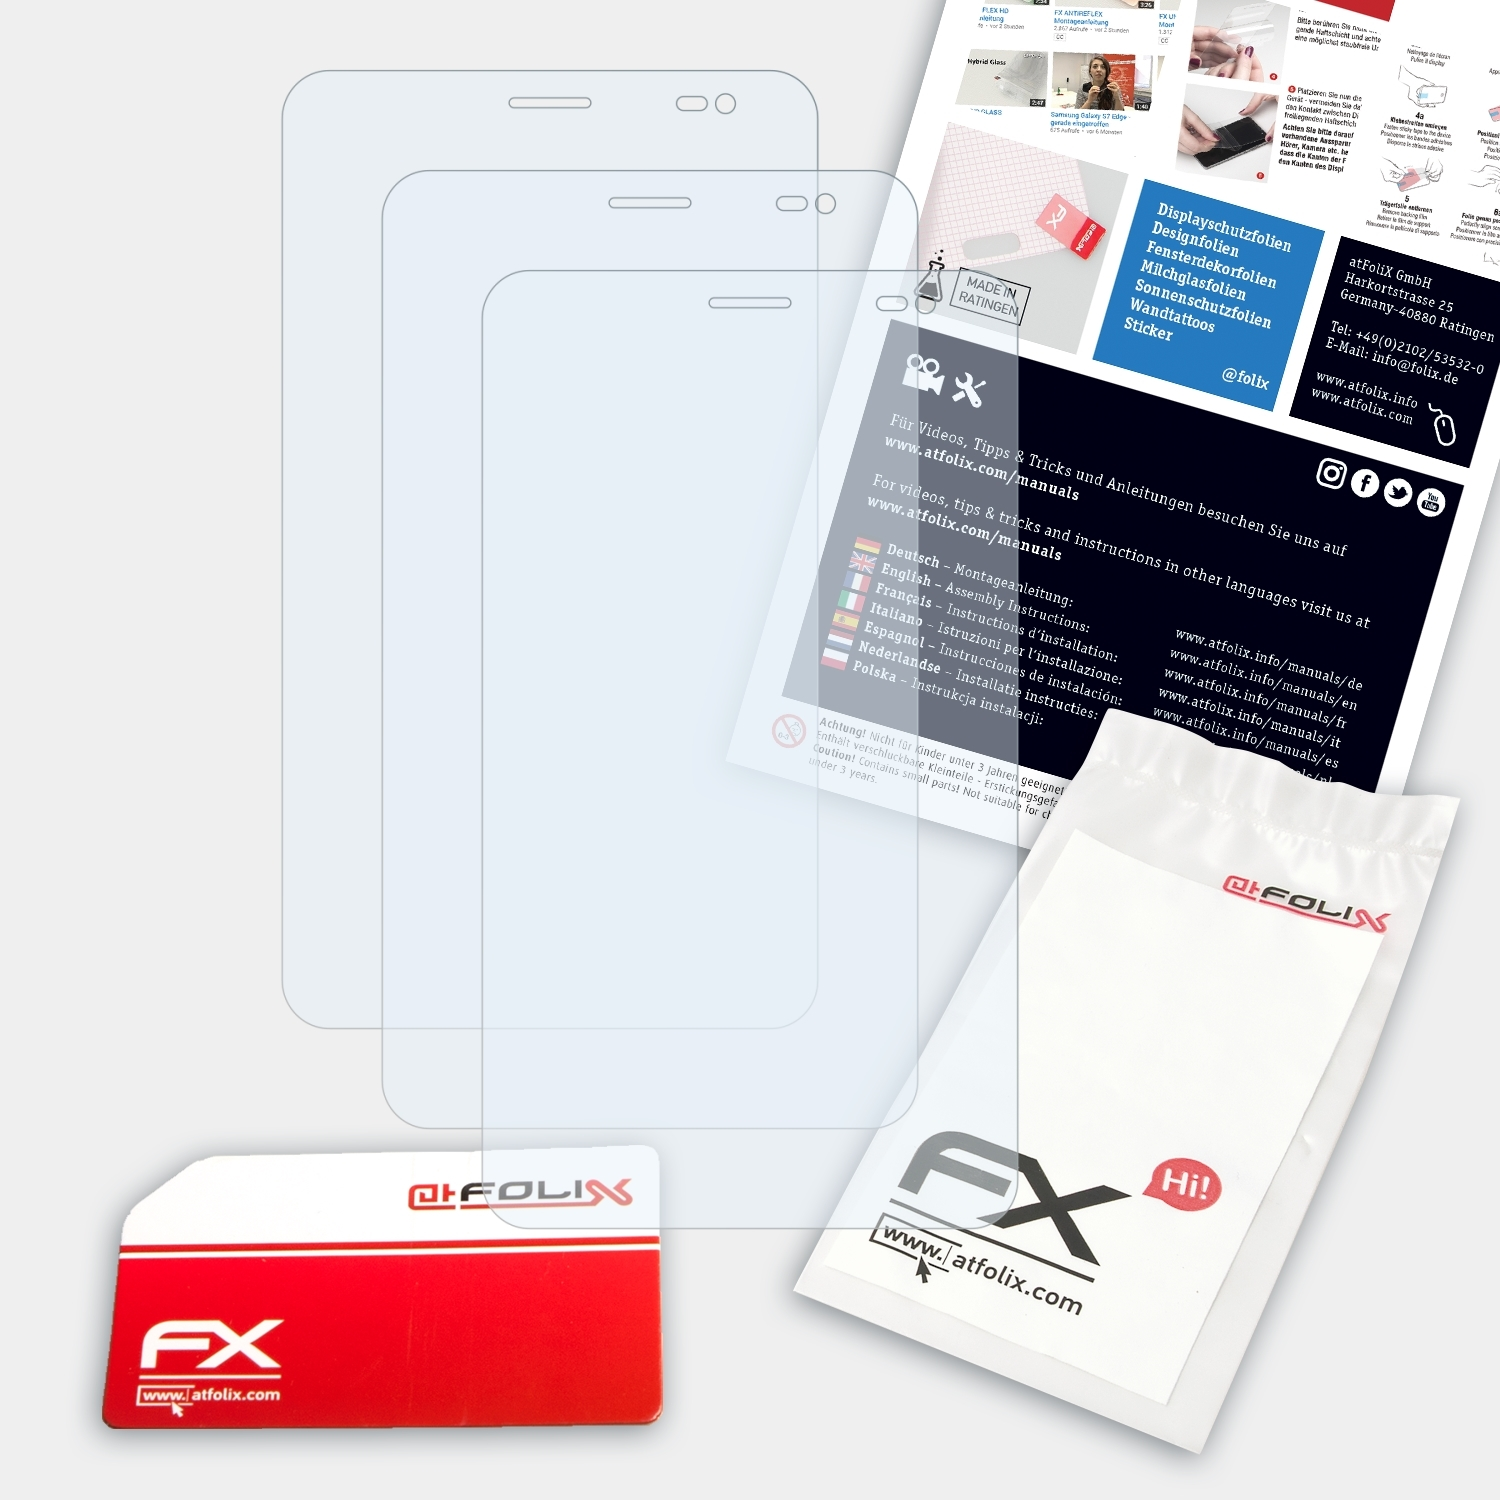 ATFOLIX 3x FX-Clear Displayschutz(für Huawei MediaPad X2)